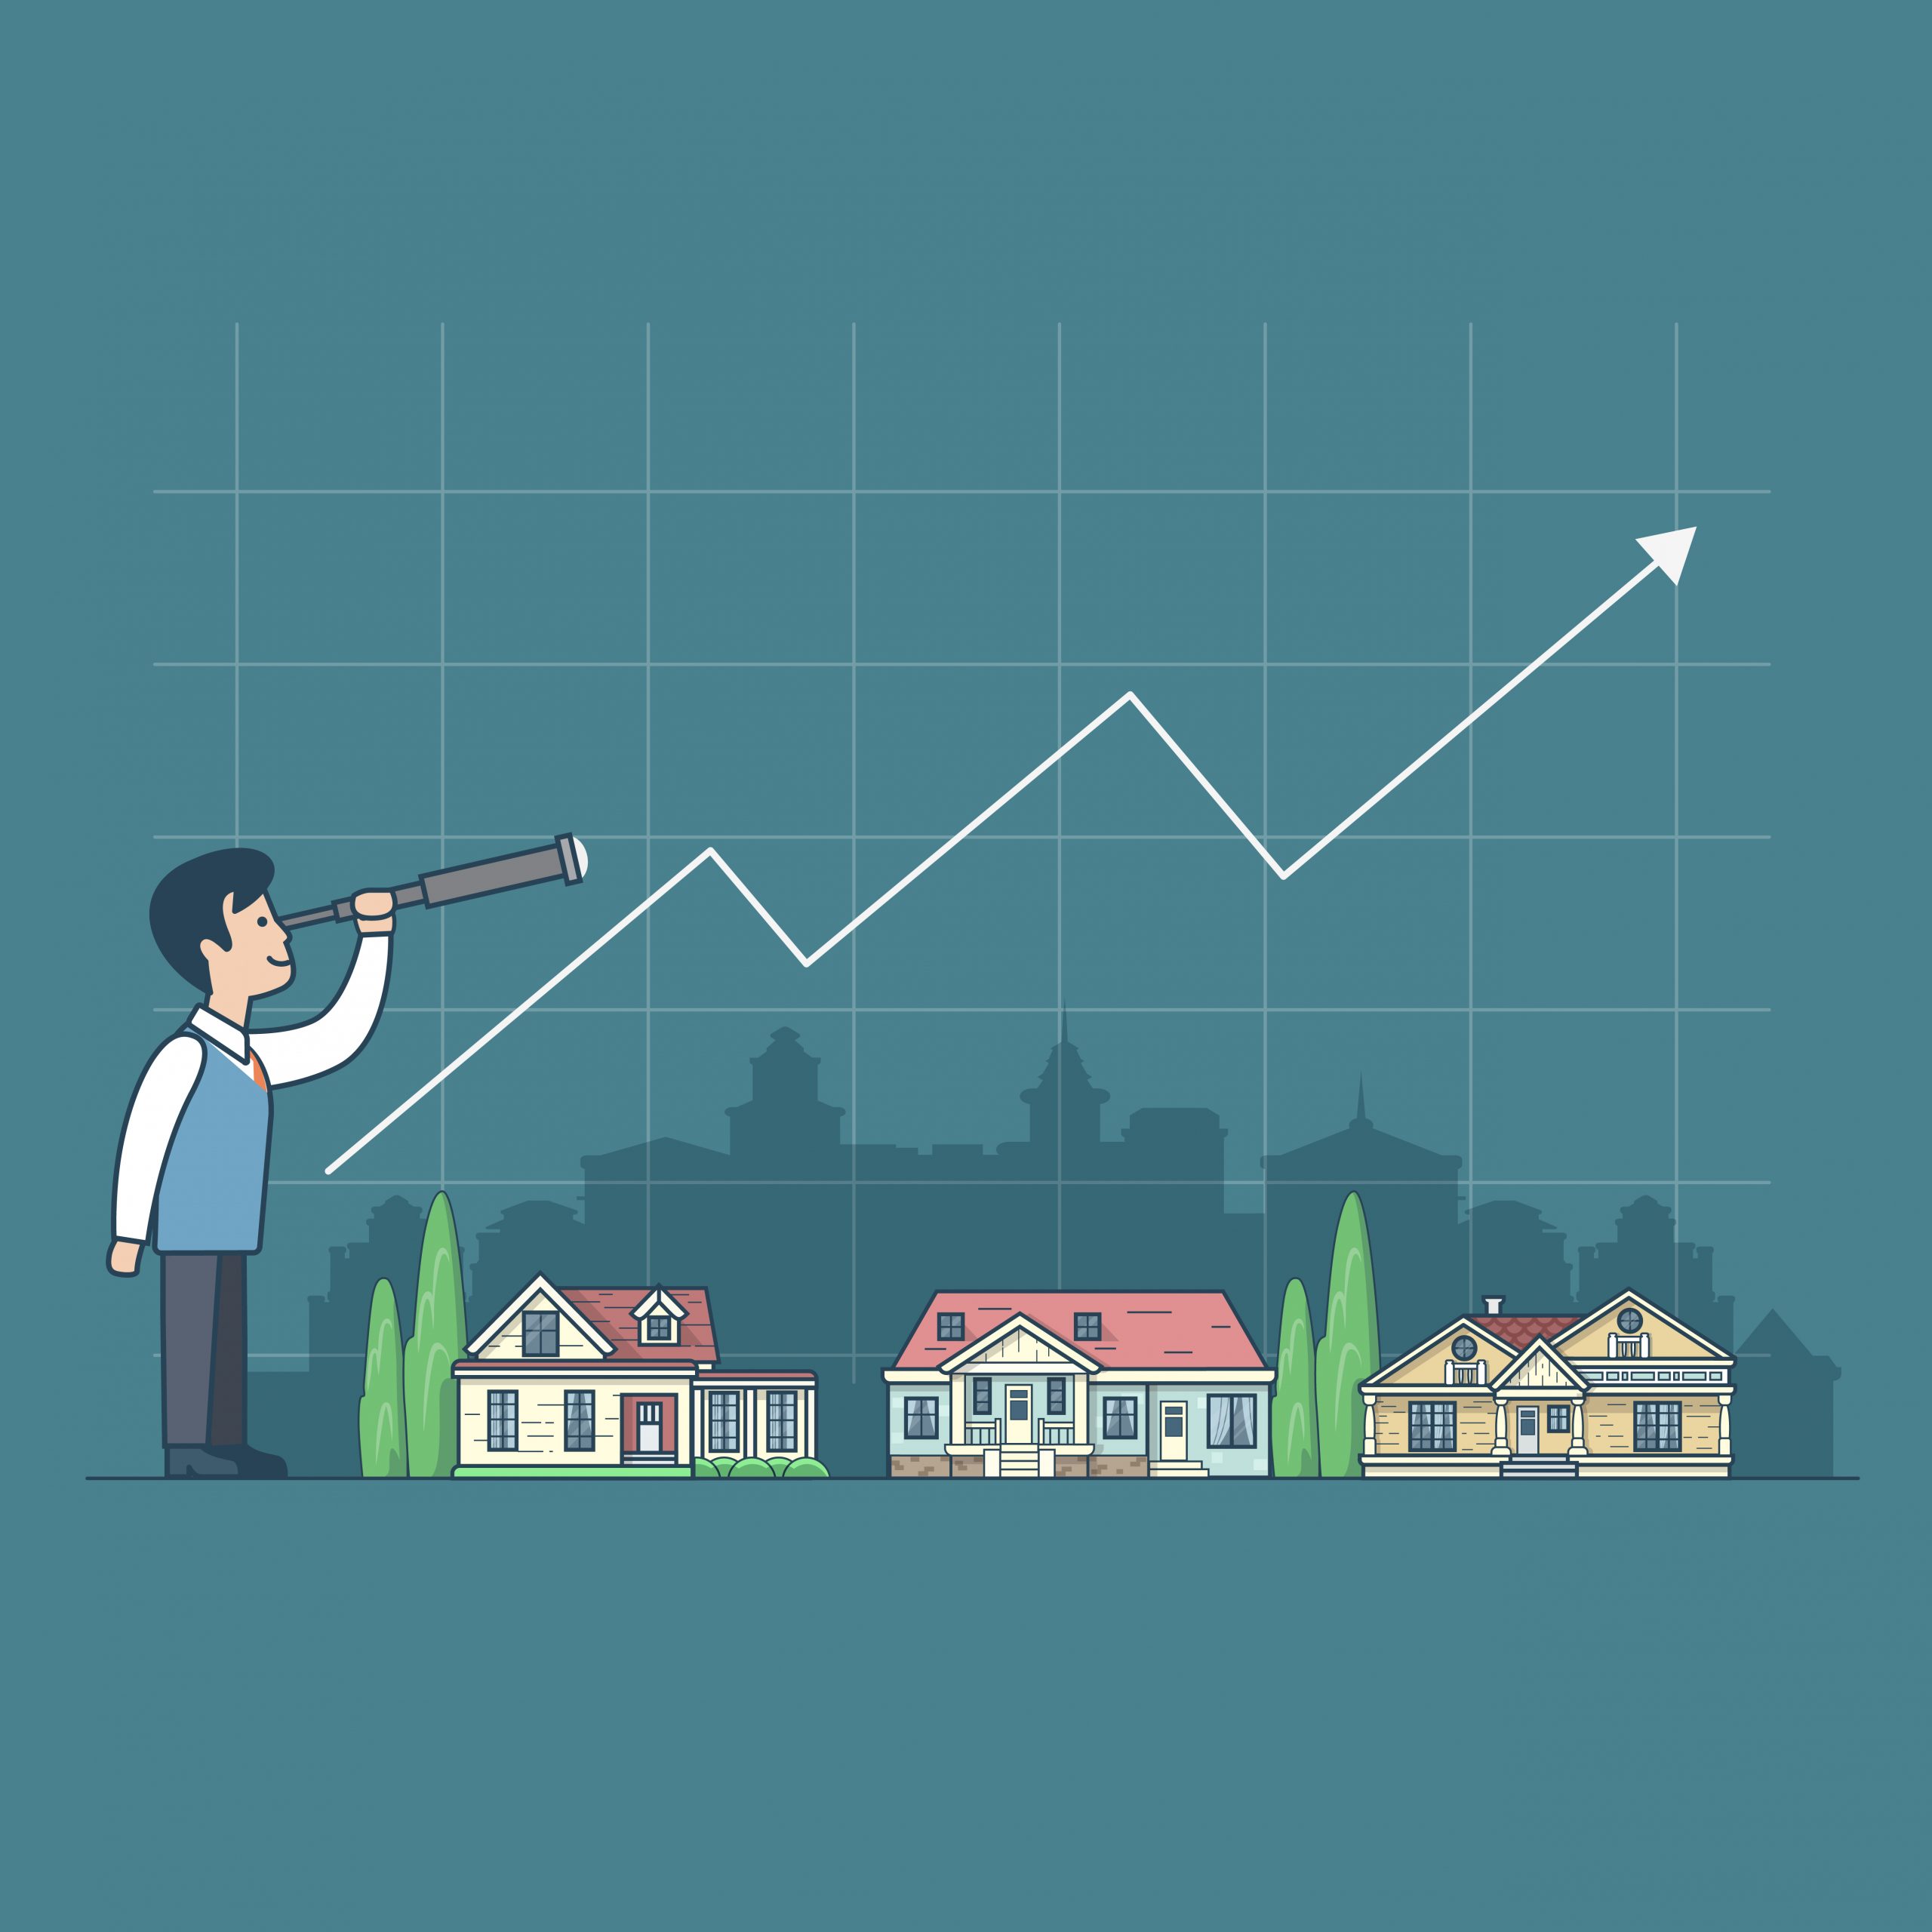 Real Estate Market Trends in Hingham